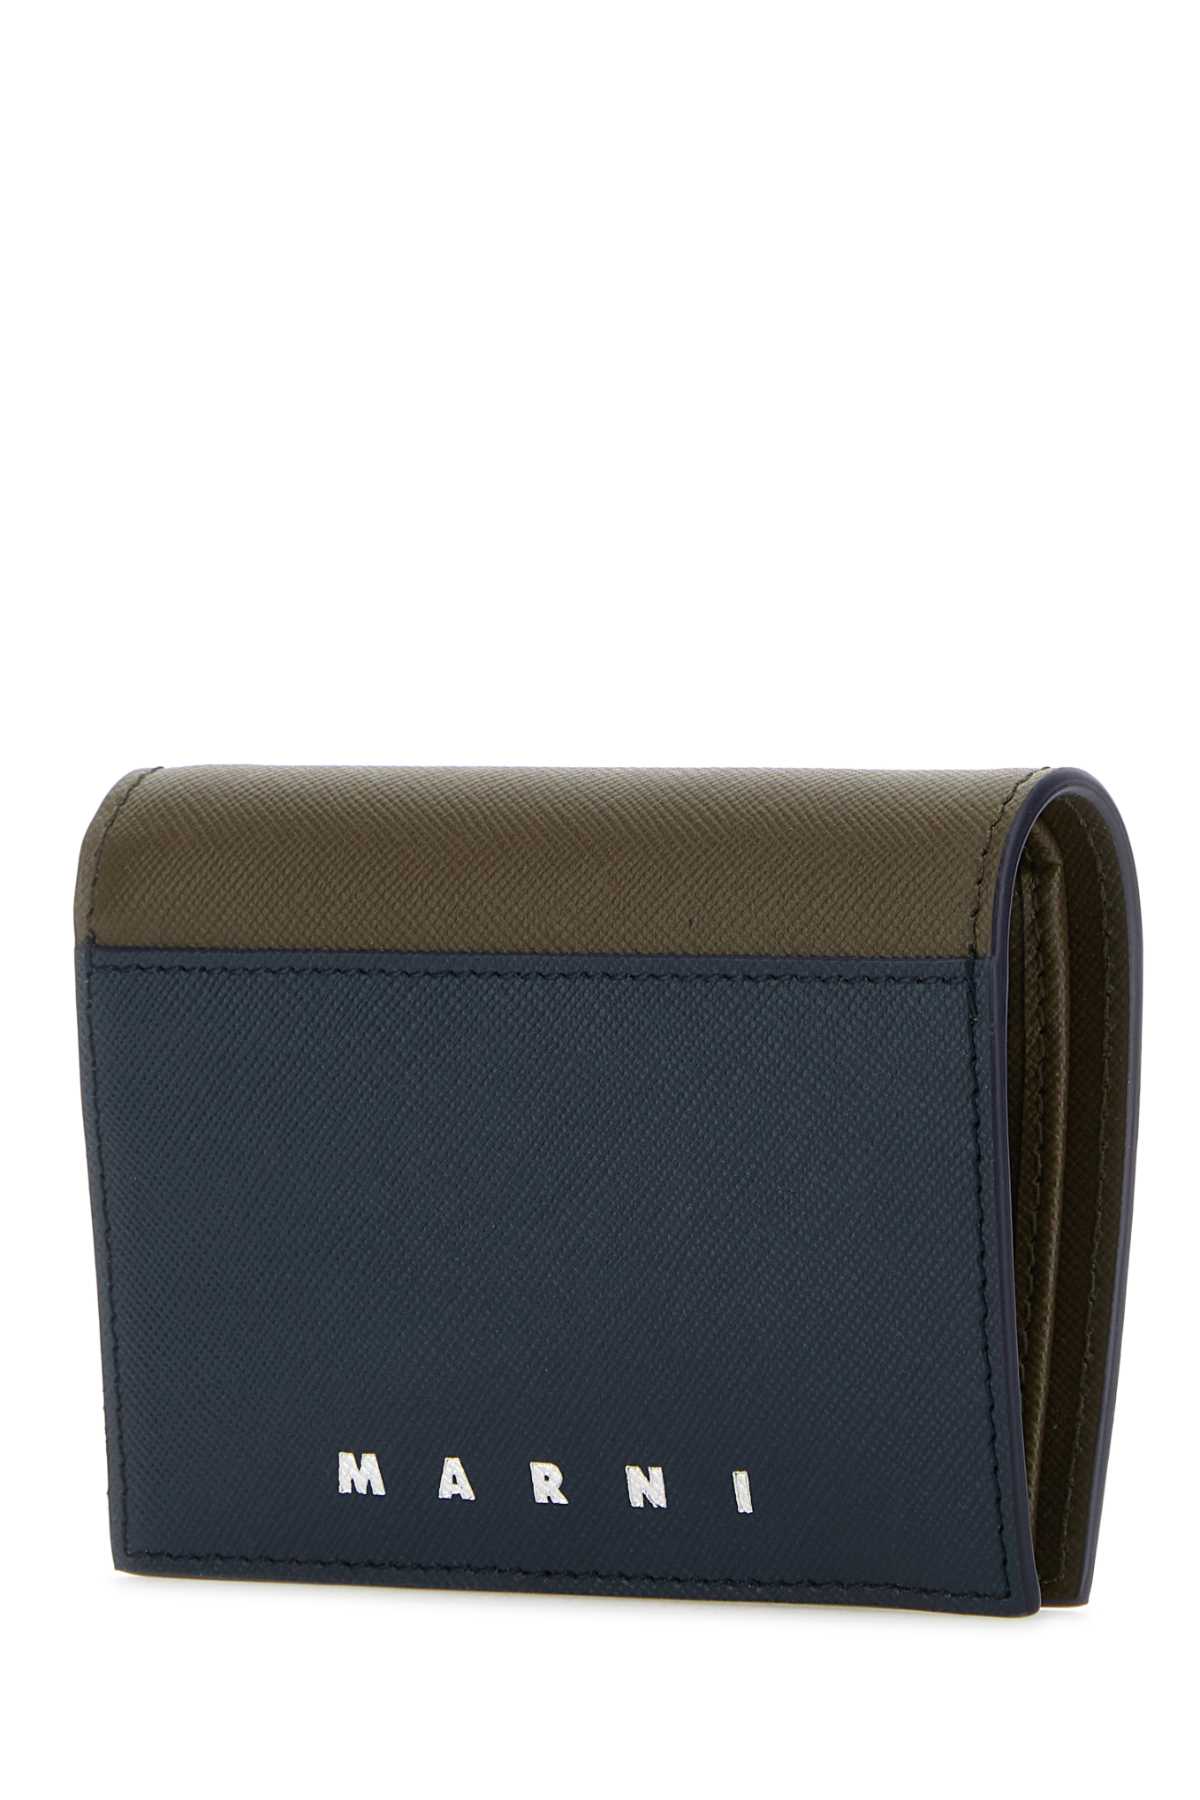 Marni Two-tone Leather Wallet In Nightbluedustyolive